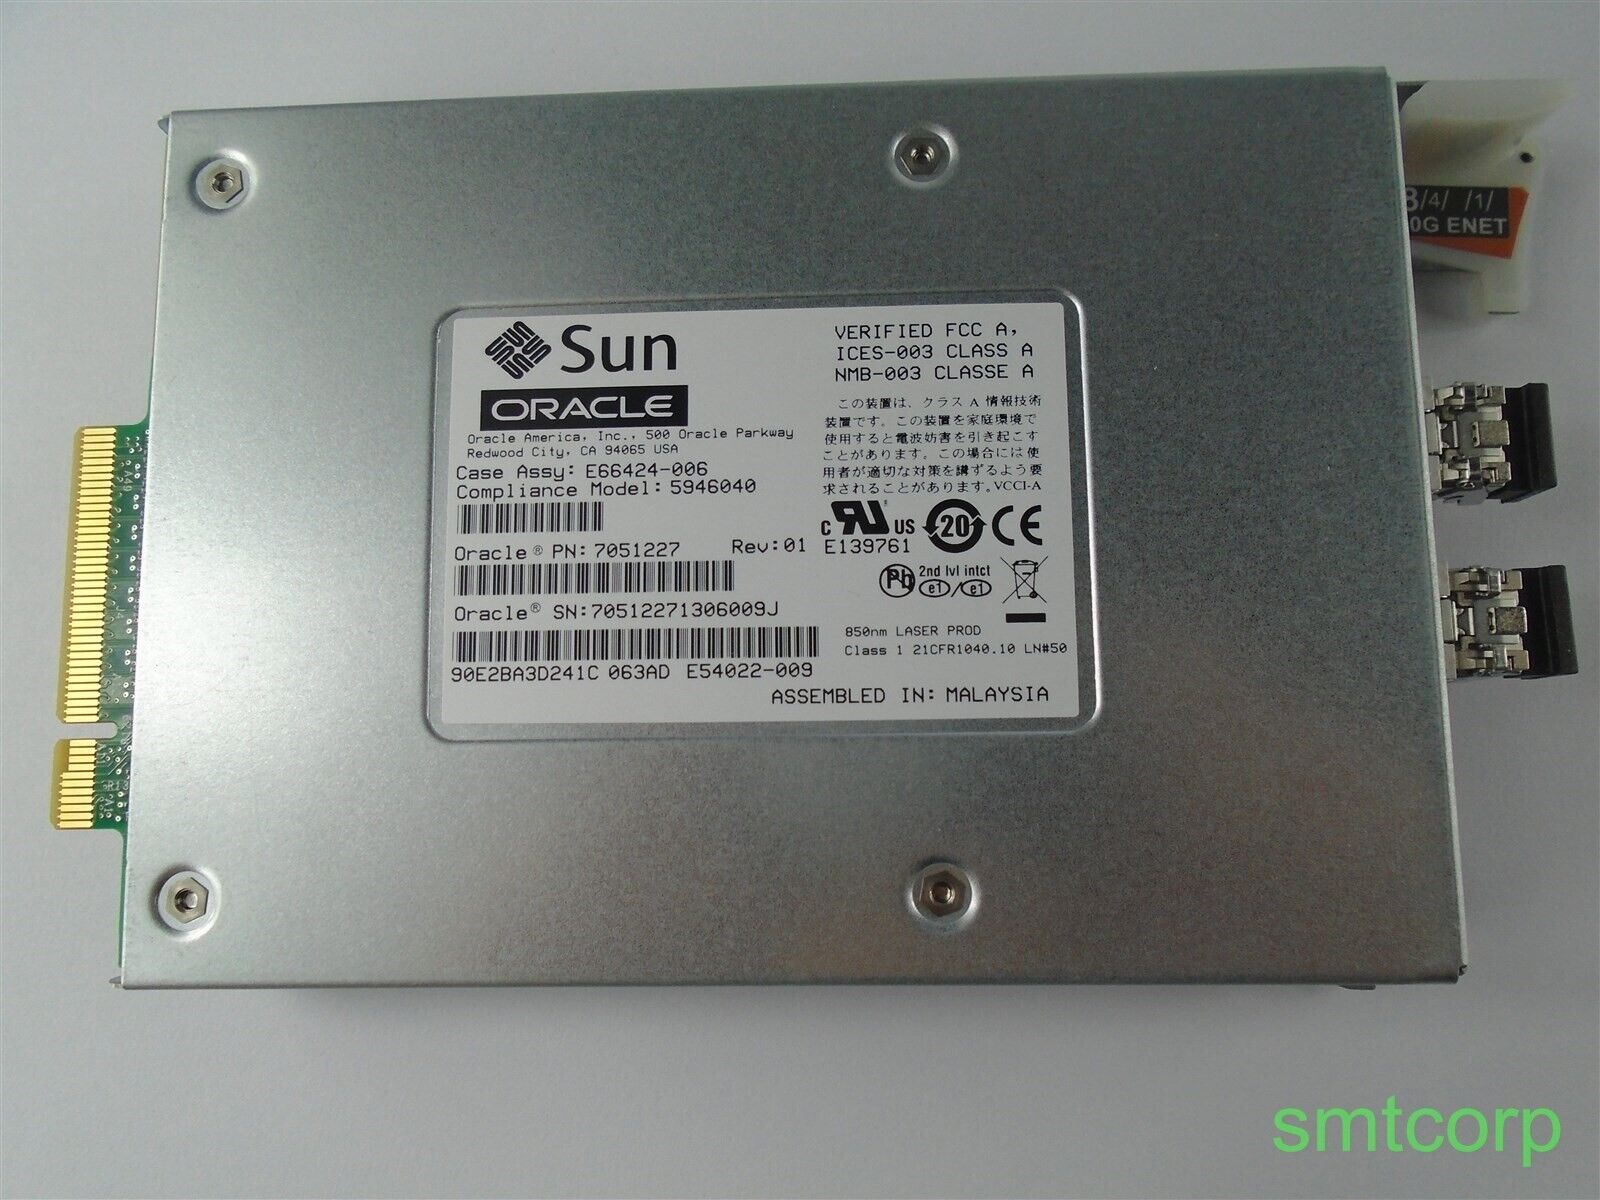 SUN Oracle 7051227 DUAL PORT 10GB ETHERNET W/ 2 SFP 10GB SUN 530-4449